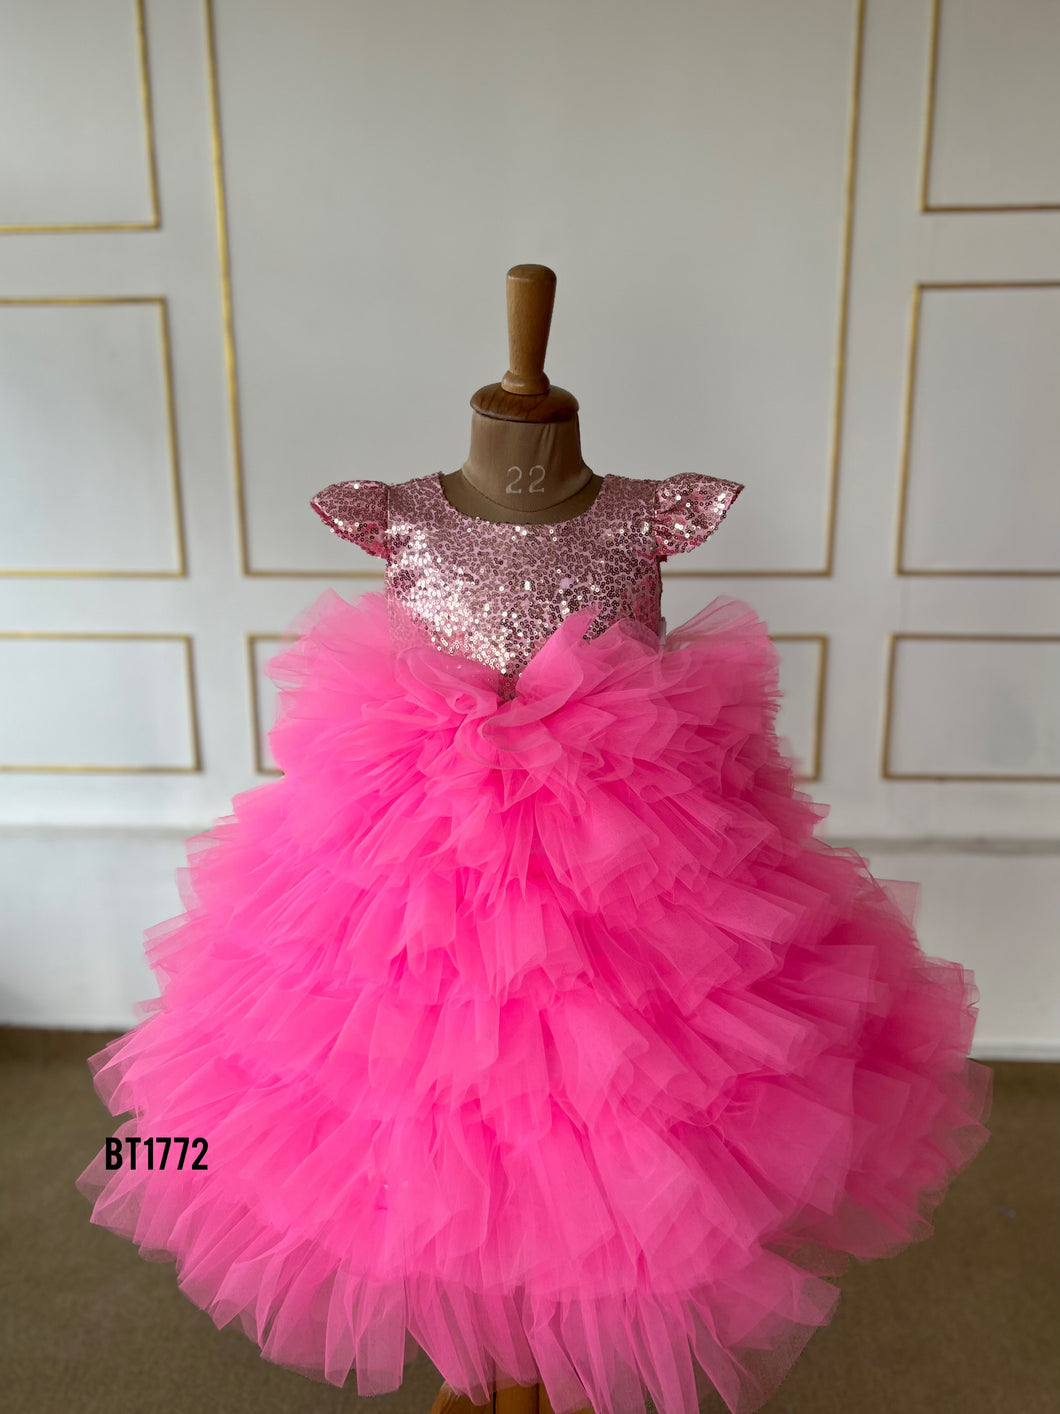 BT1772 Sparkling Pink Flutter Dress - A Fairy-Tale Gown for Your Little Star